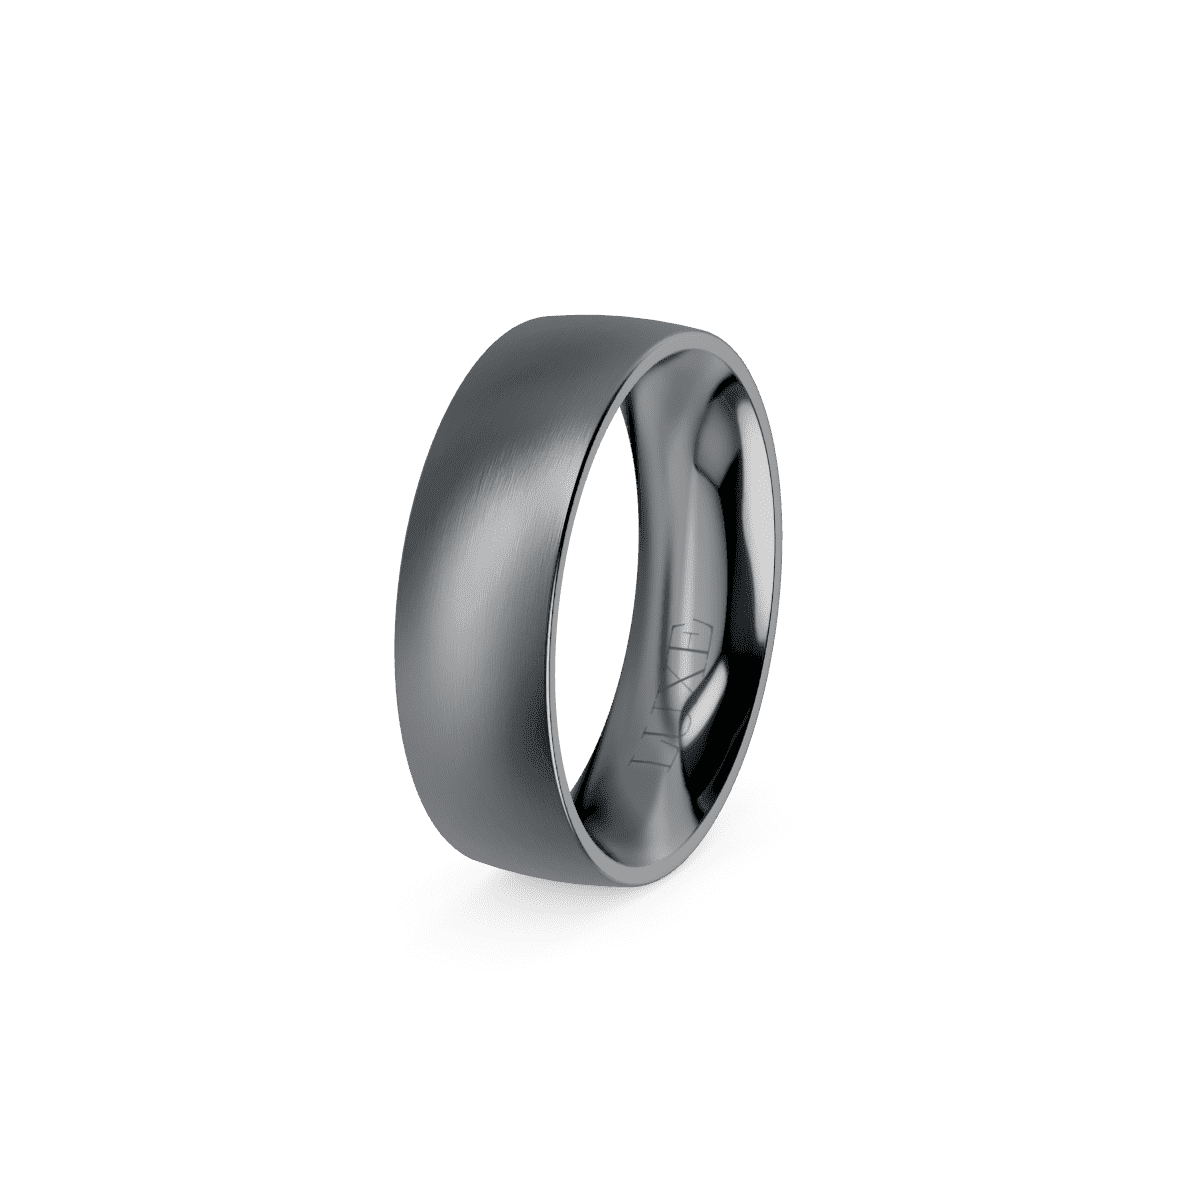 Reno Zr Ring - Luxe Wedding Rings